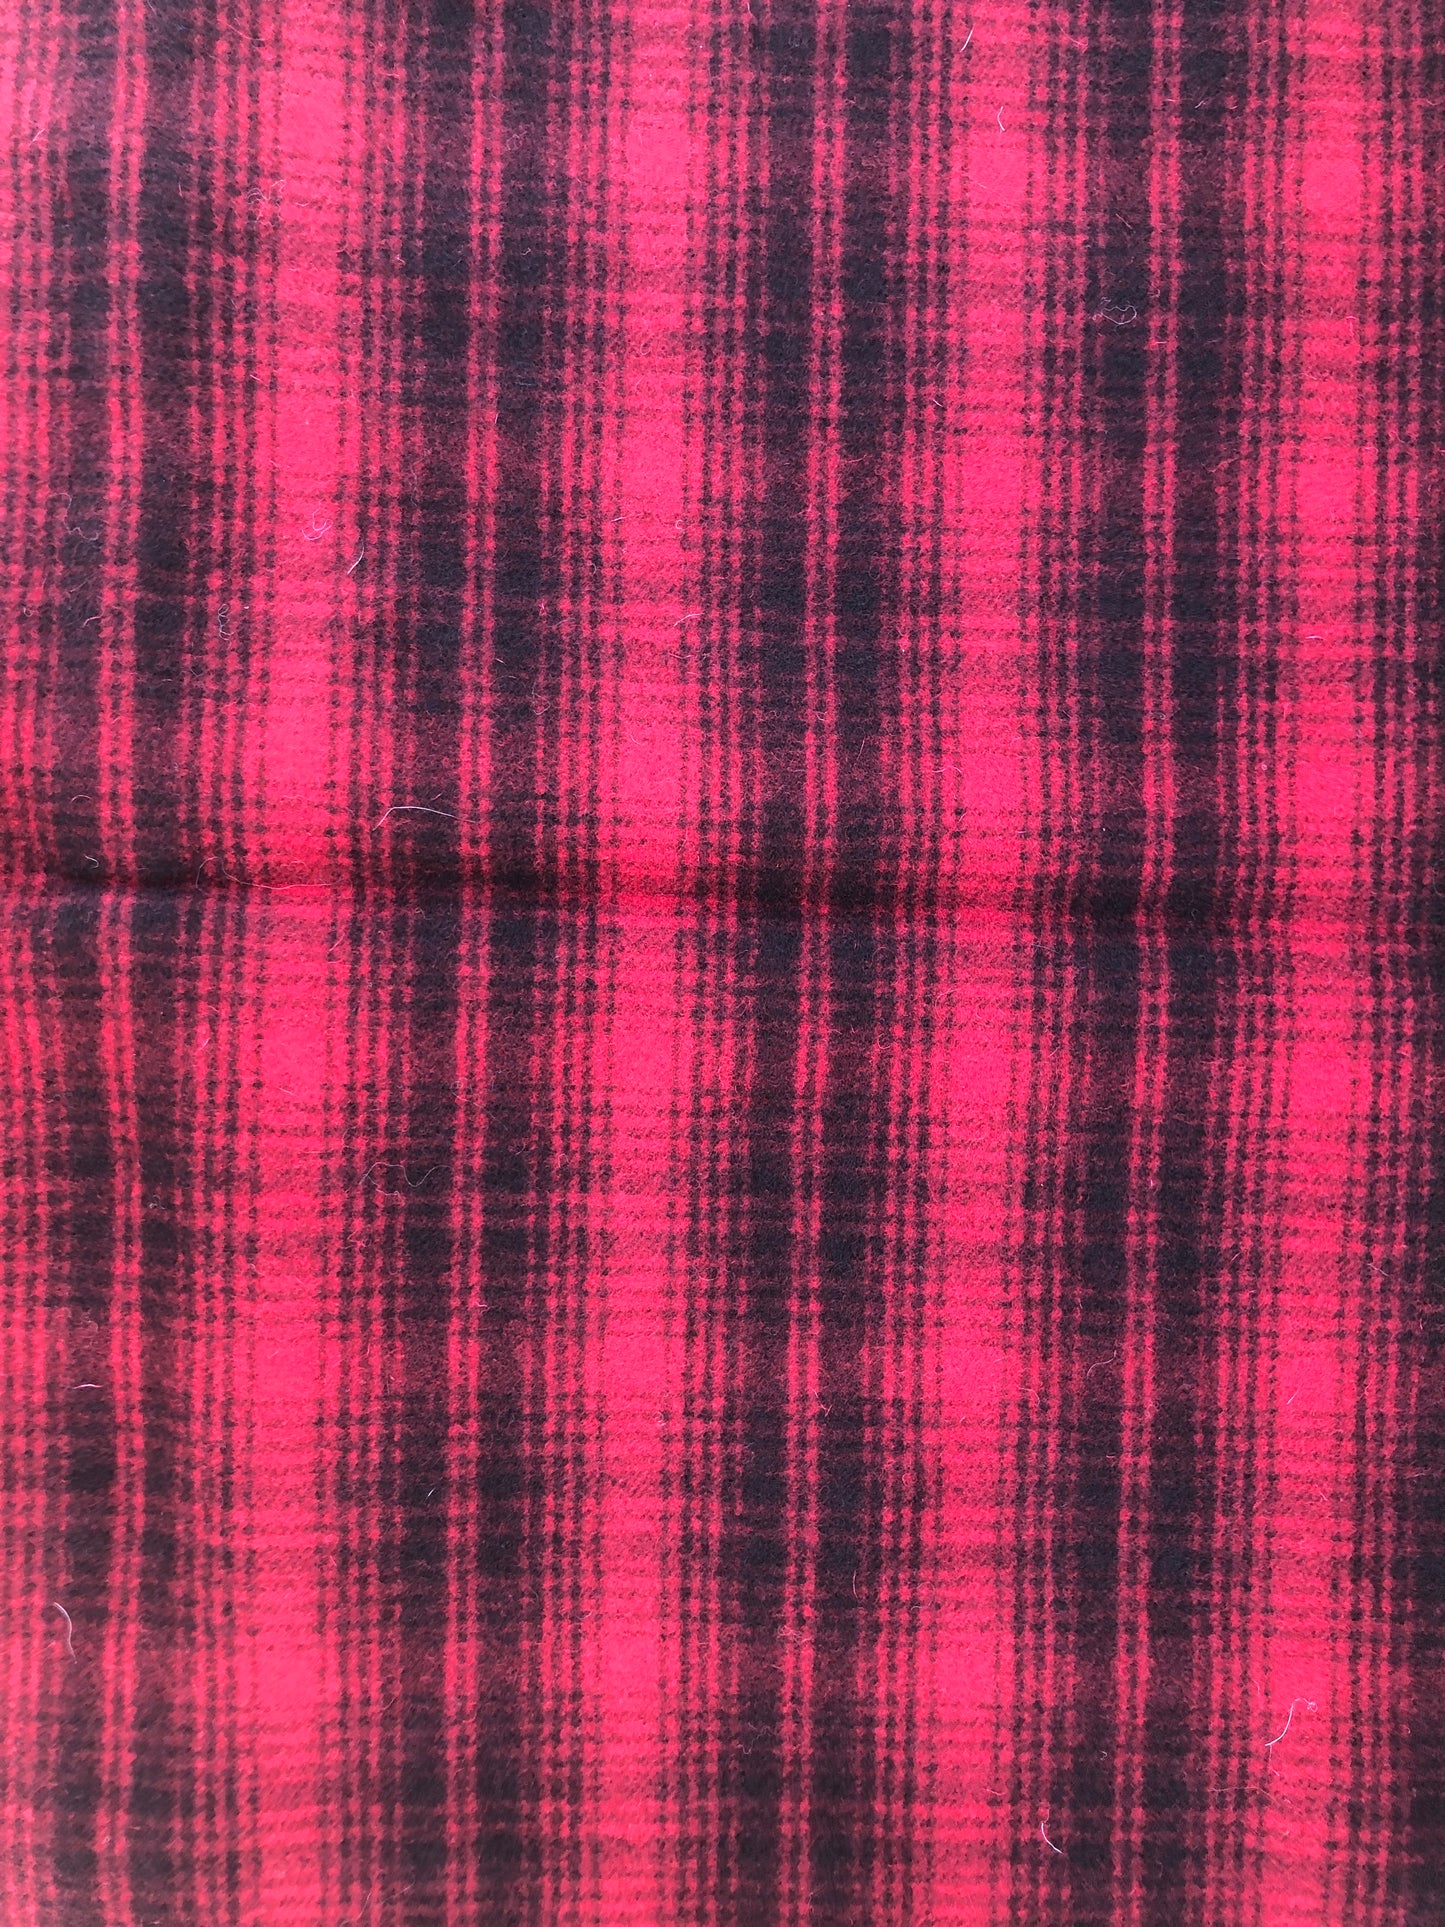 Red/Black Wool Fabric 35 x 60"